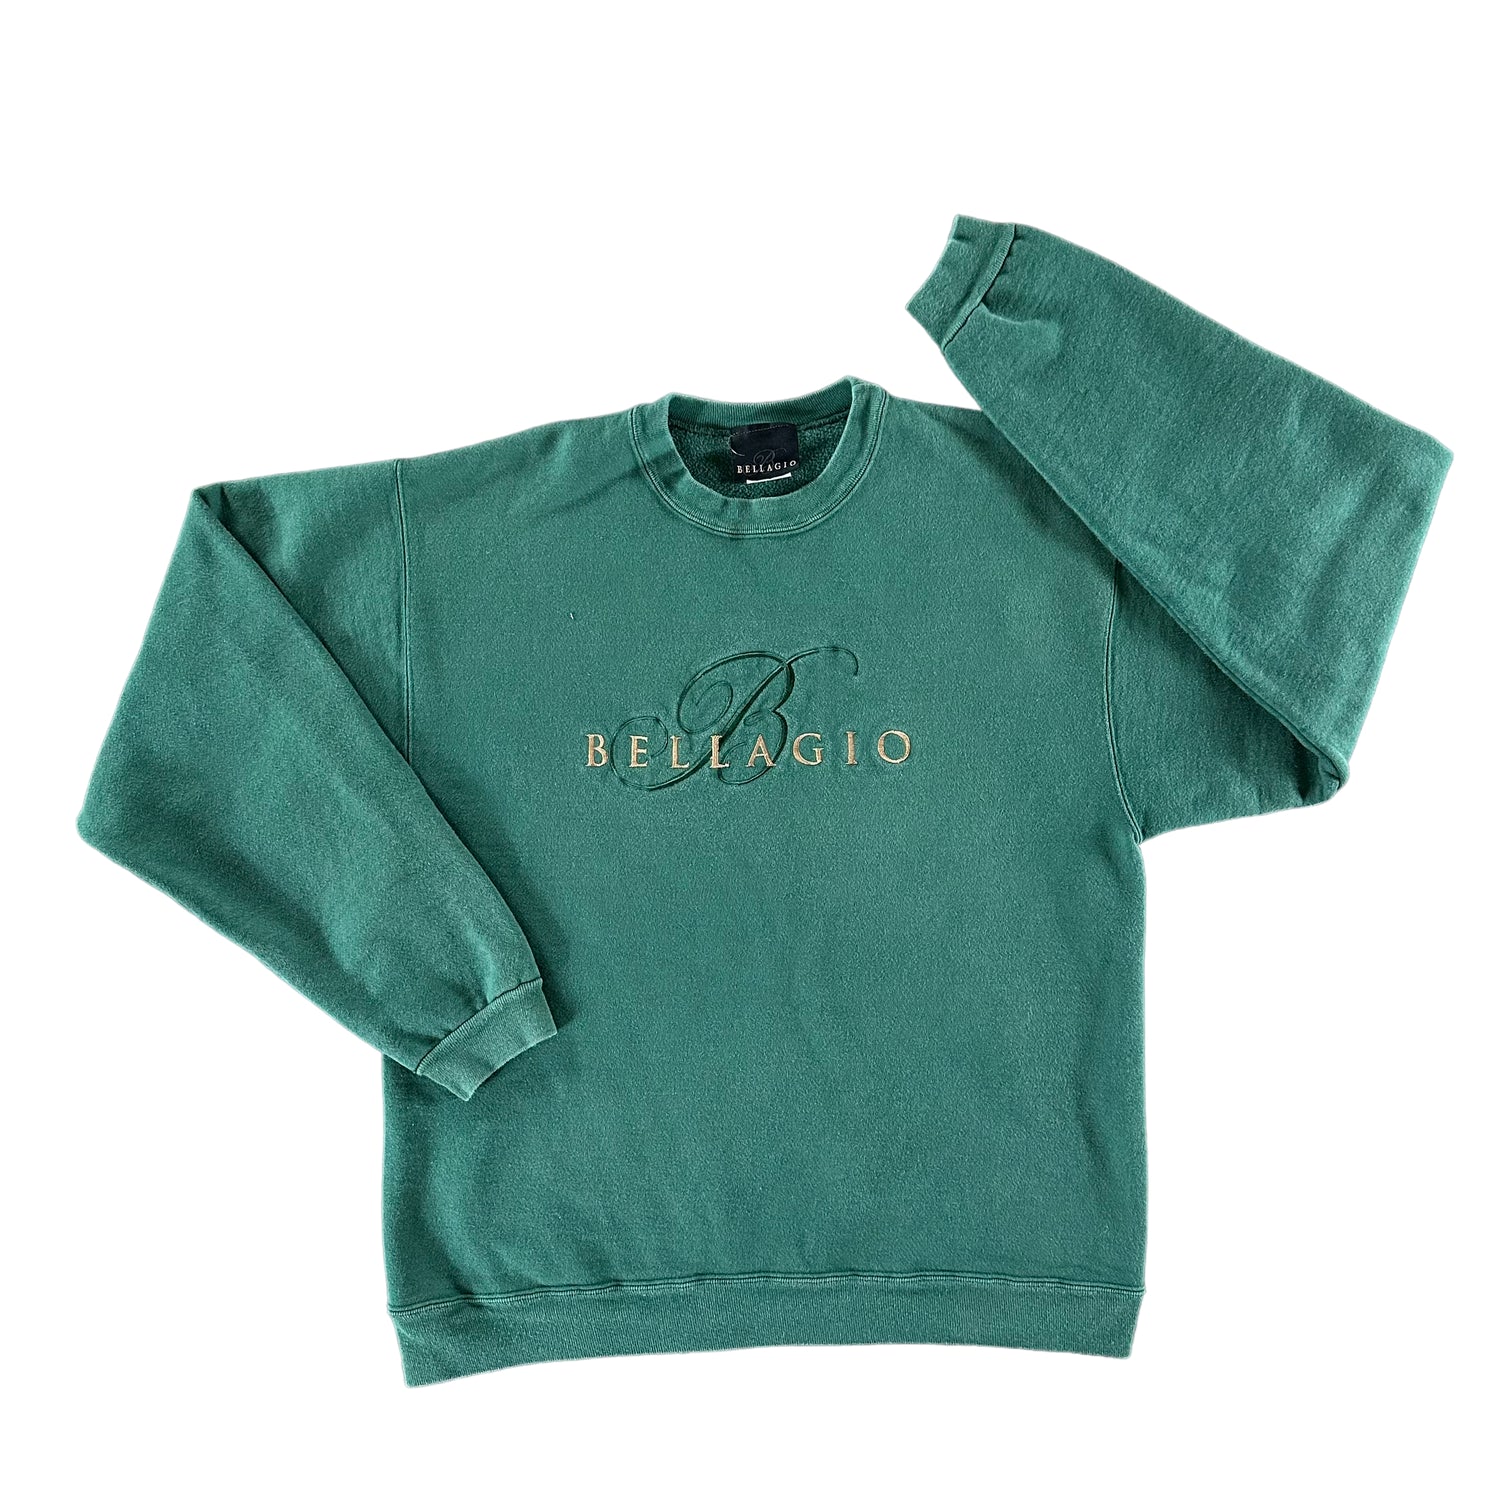 Vintage 1990s Bellagio Sweatshirt size Large